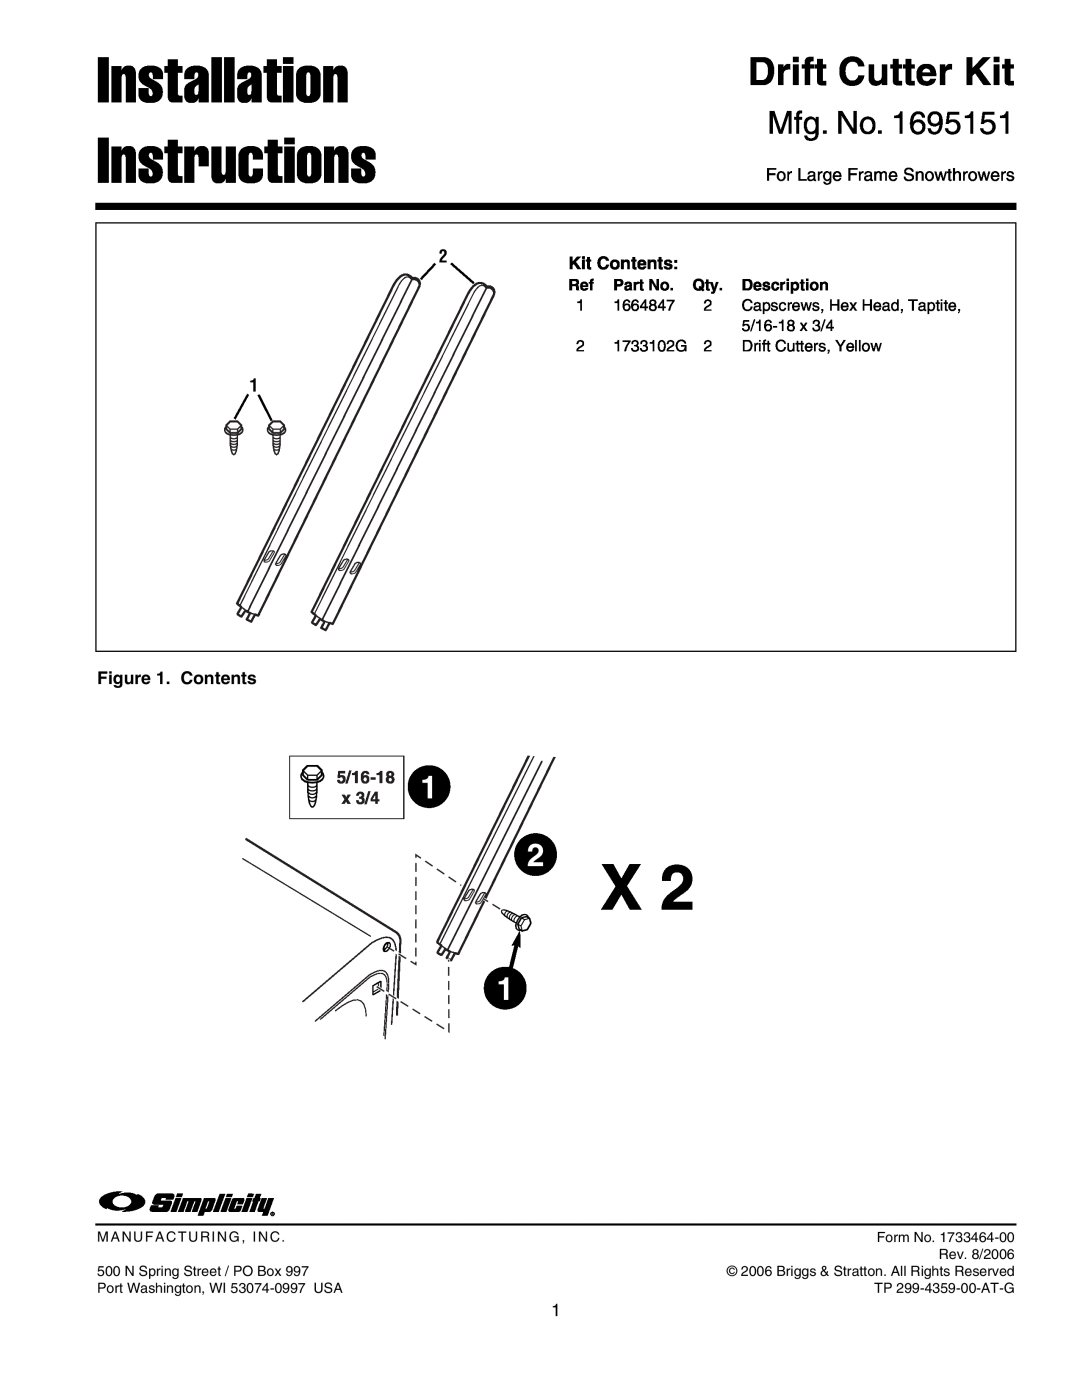 Simplicity 1695151 installation instructions Installation Instructions, Drift Cutter Kit, Mfg. No, Kit Contents, Part No 